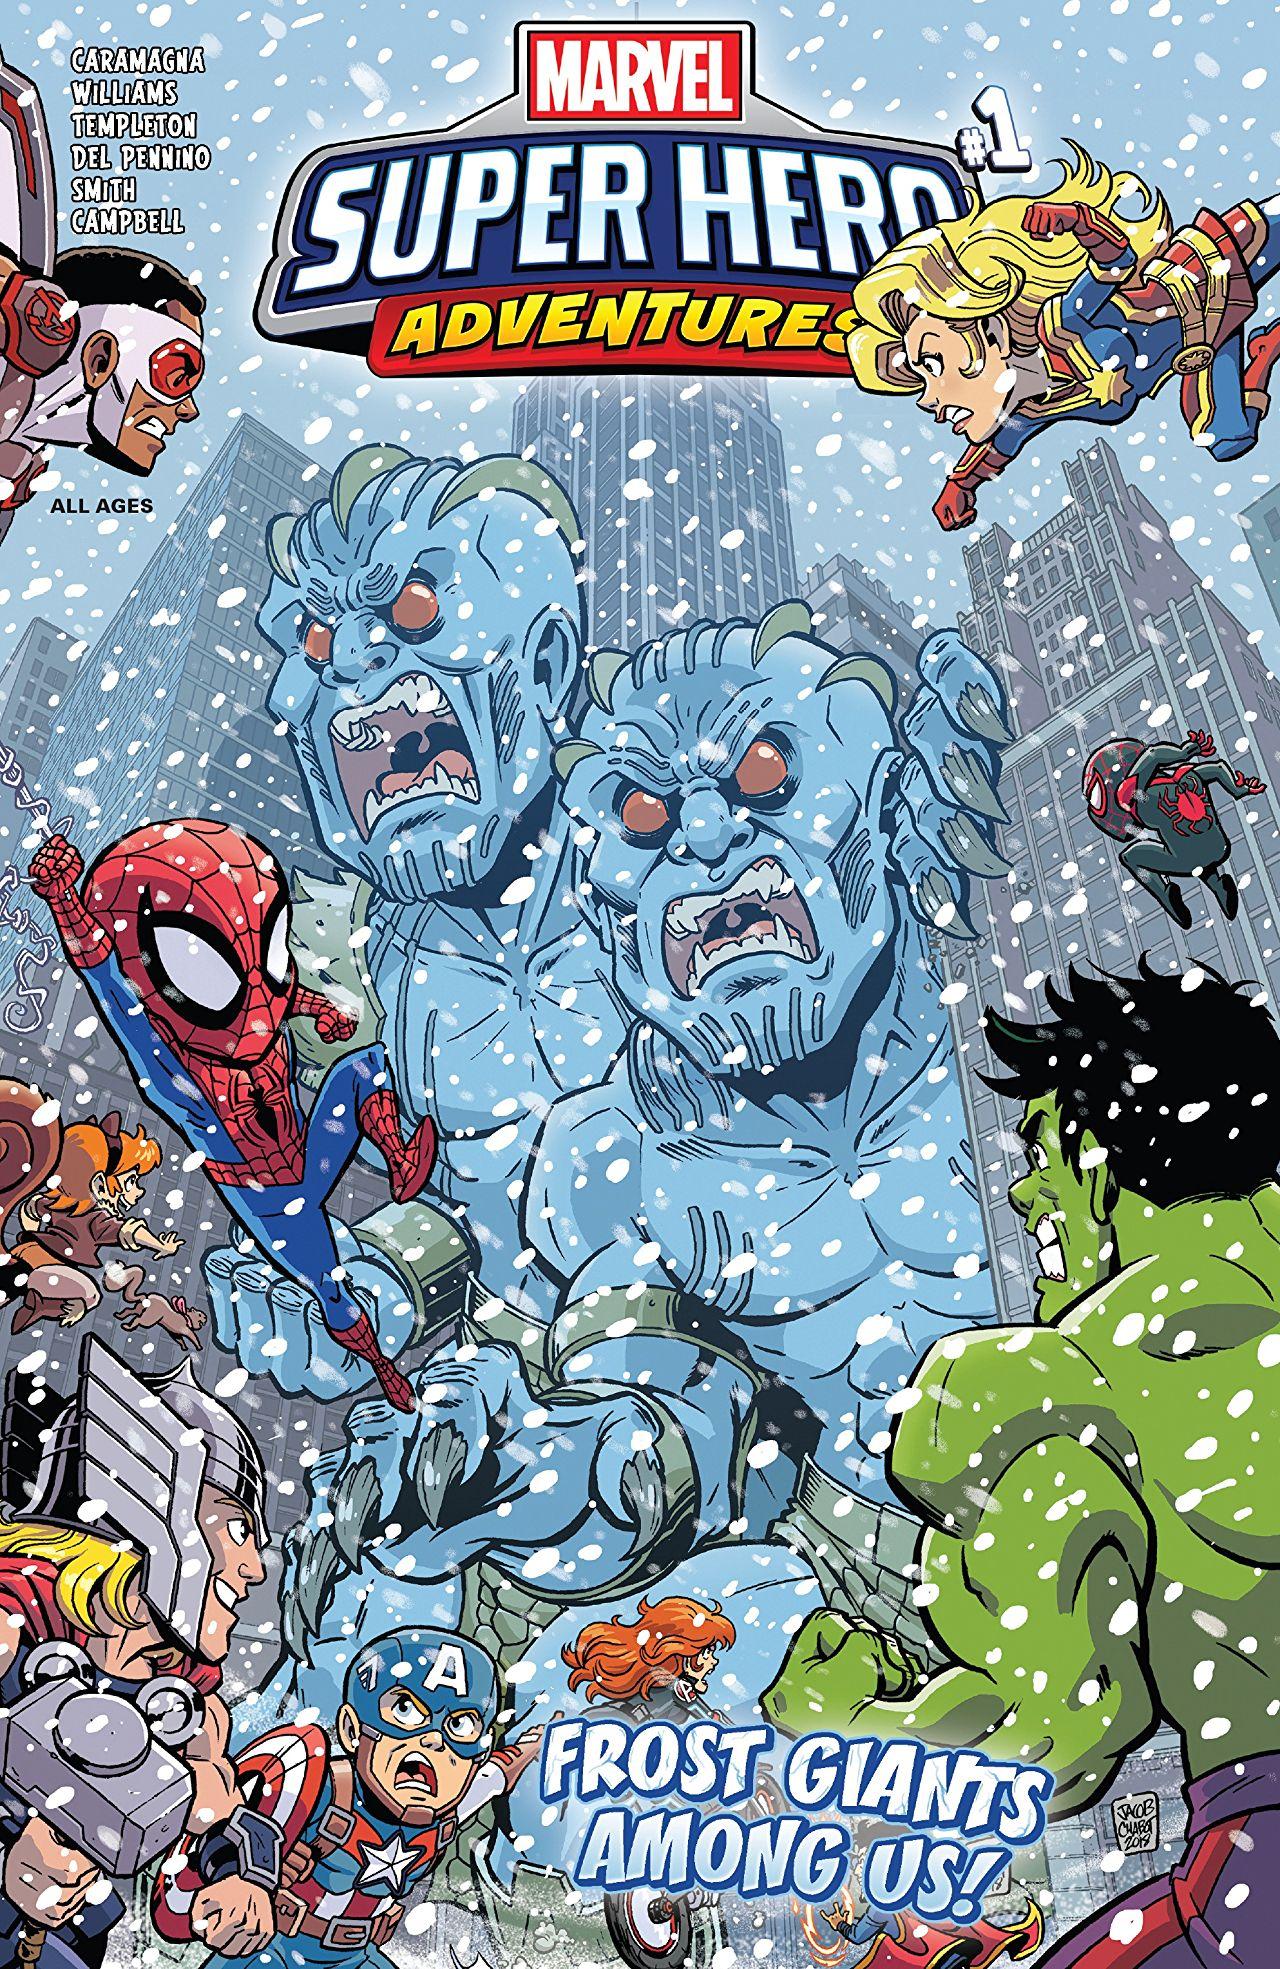 Marvel Super Hero Adventures: Captain Marvel - Frost Giants Among Us! Vol. 1 #1